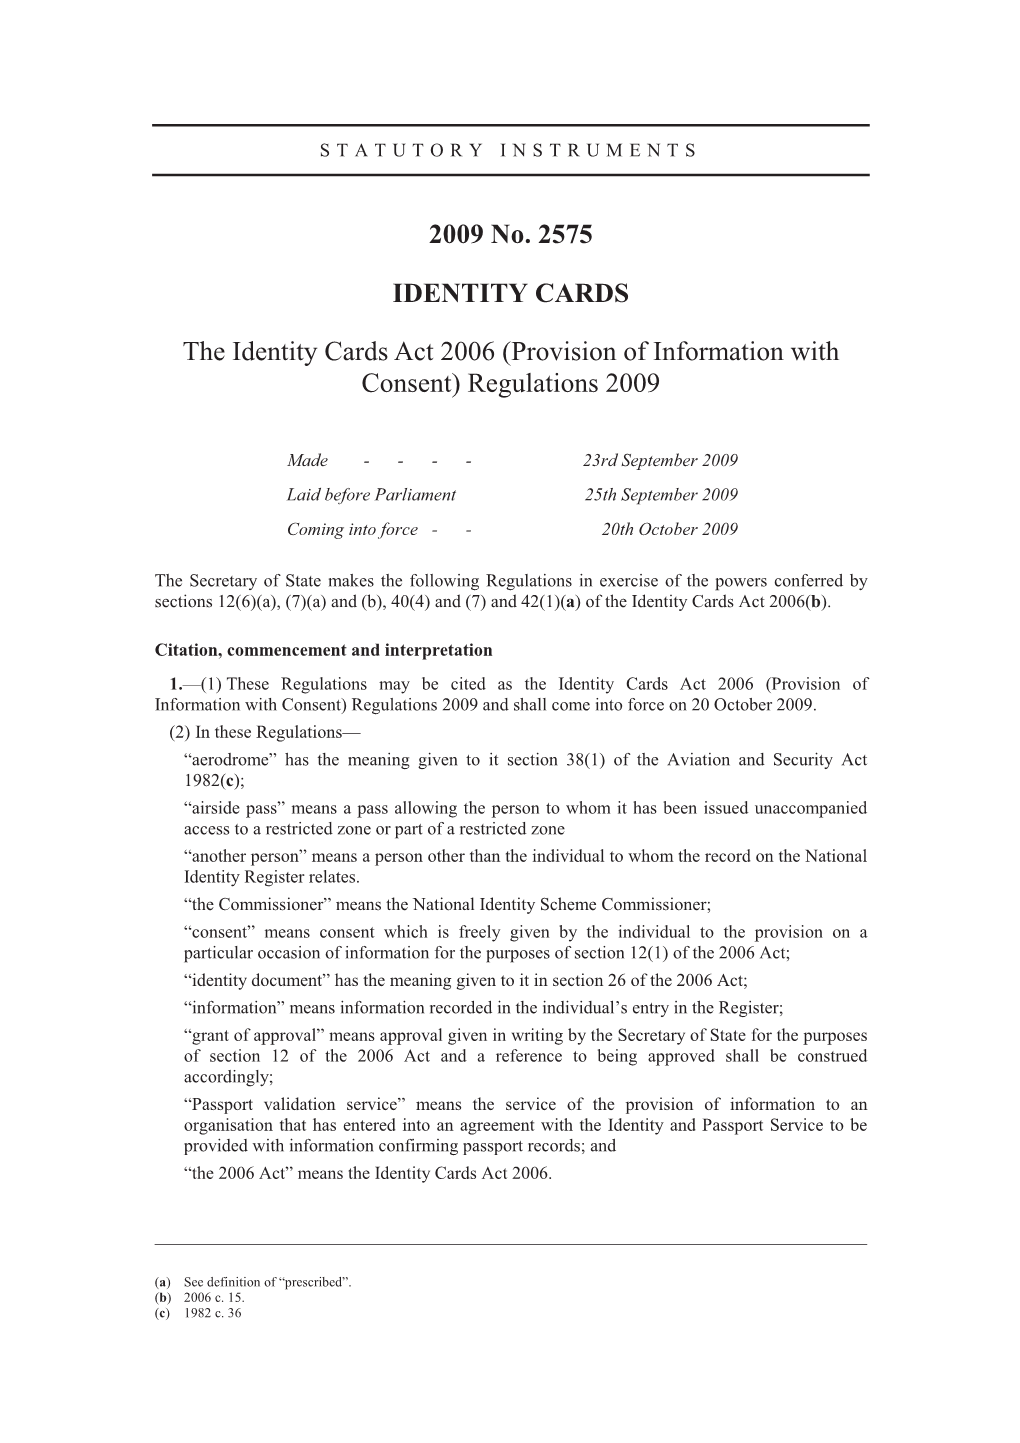 Regulations 2009